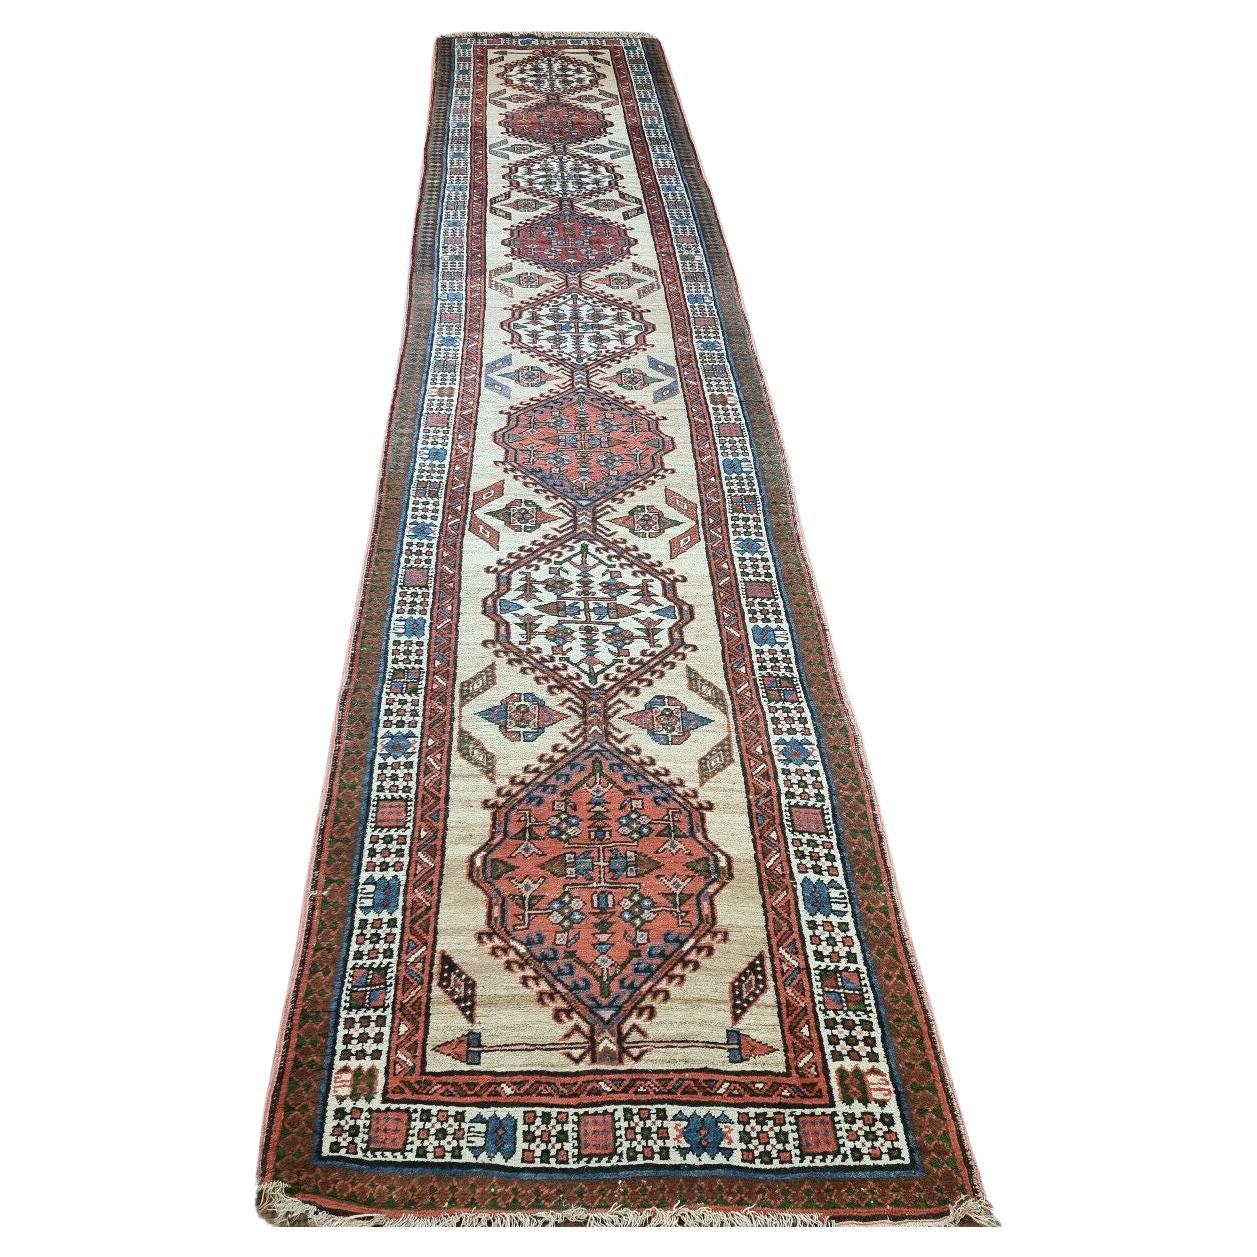 Handmade Antique Persian Style Serab Runner Rug 3.2' x 14.9', 1900s - 1D101